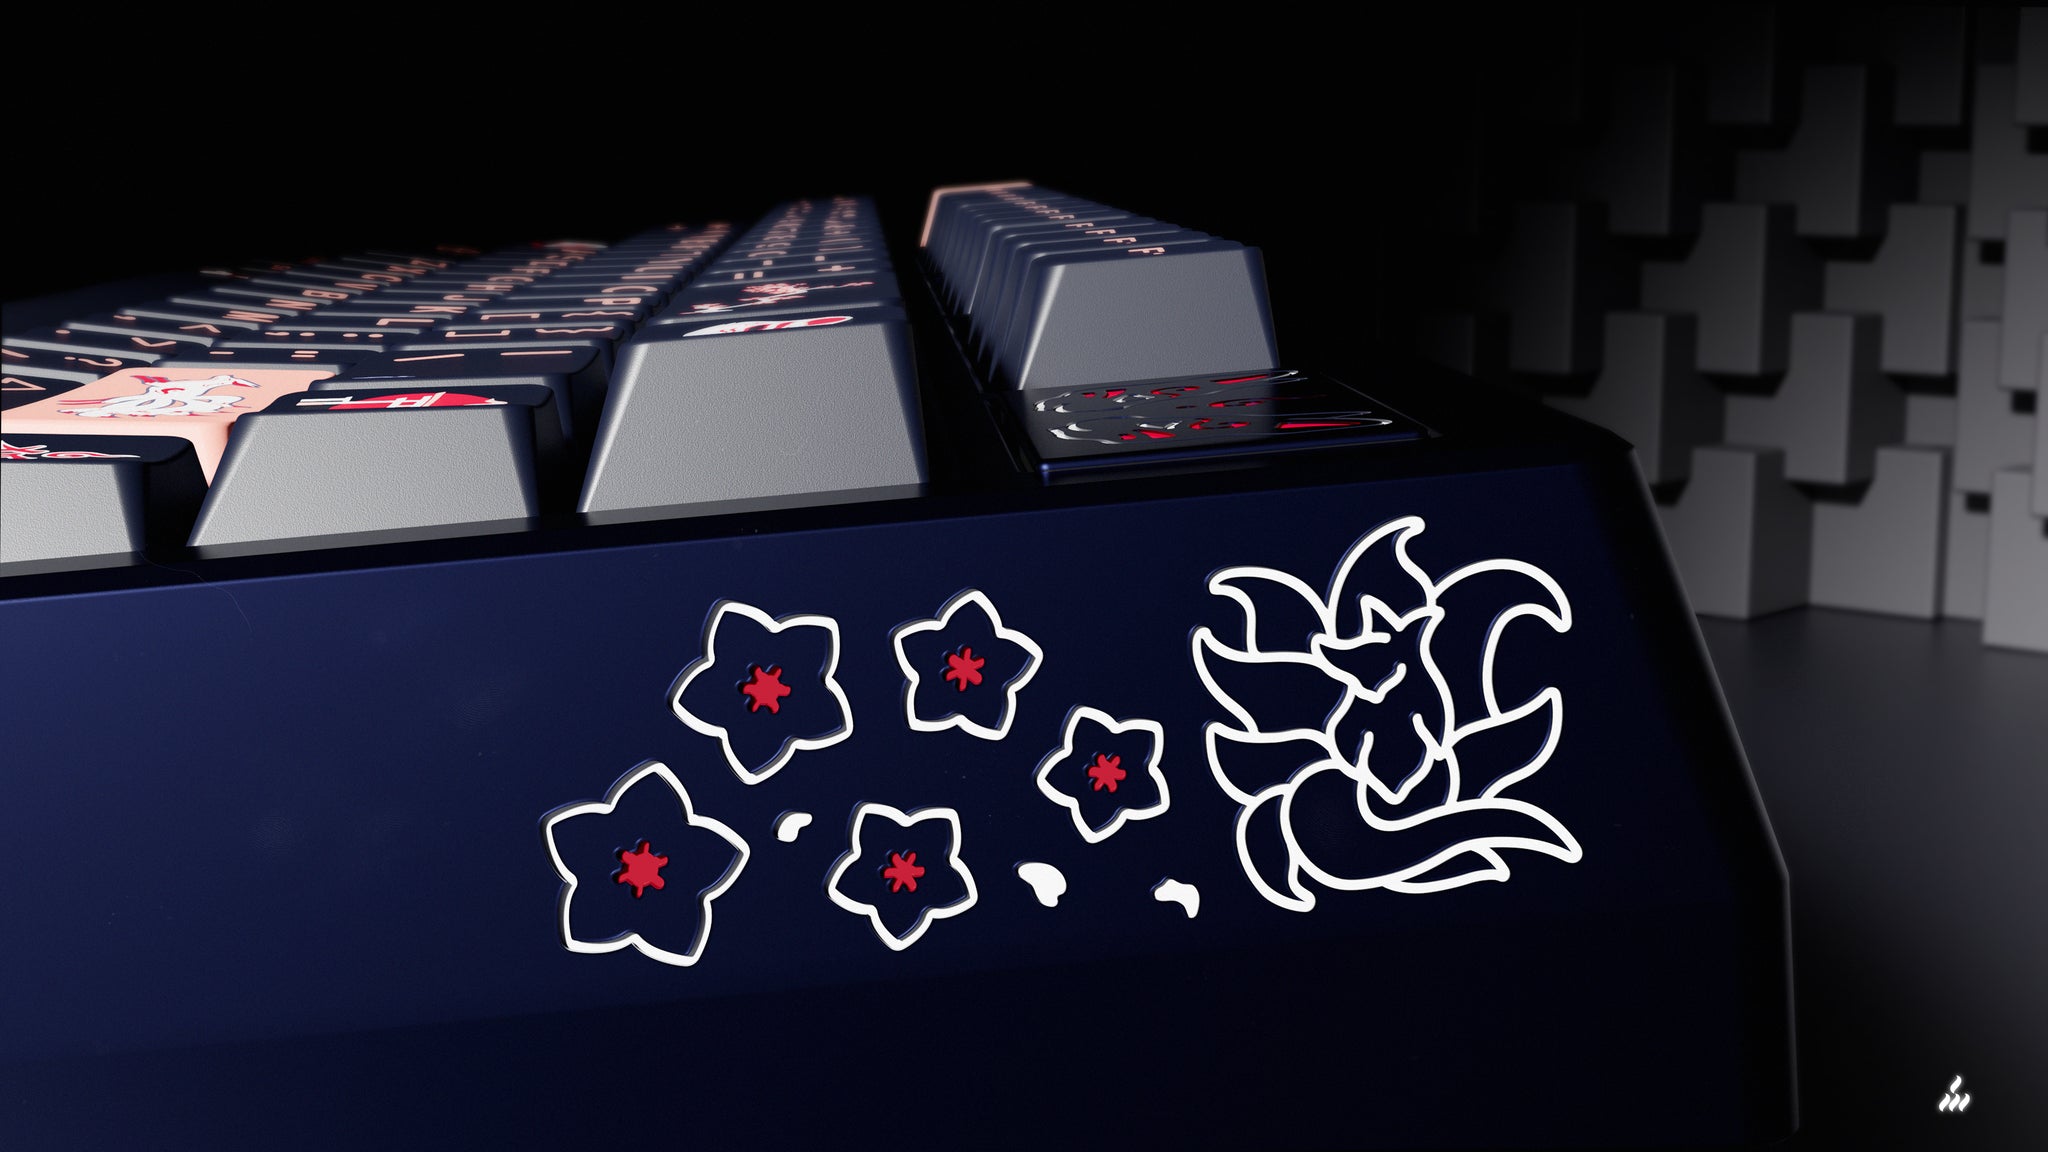 [Group-Buy] Meletrix Zoom75 X Kitsune Edition - Barebones Keyboard Kit